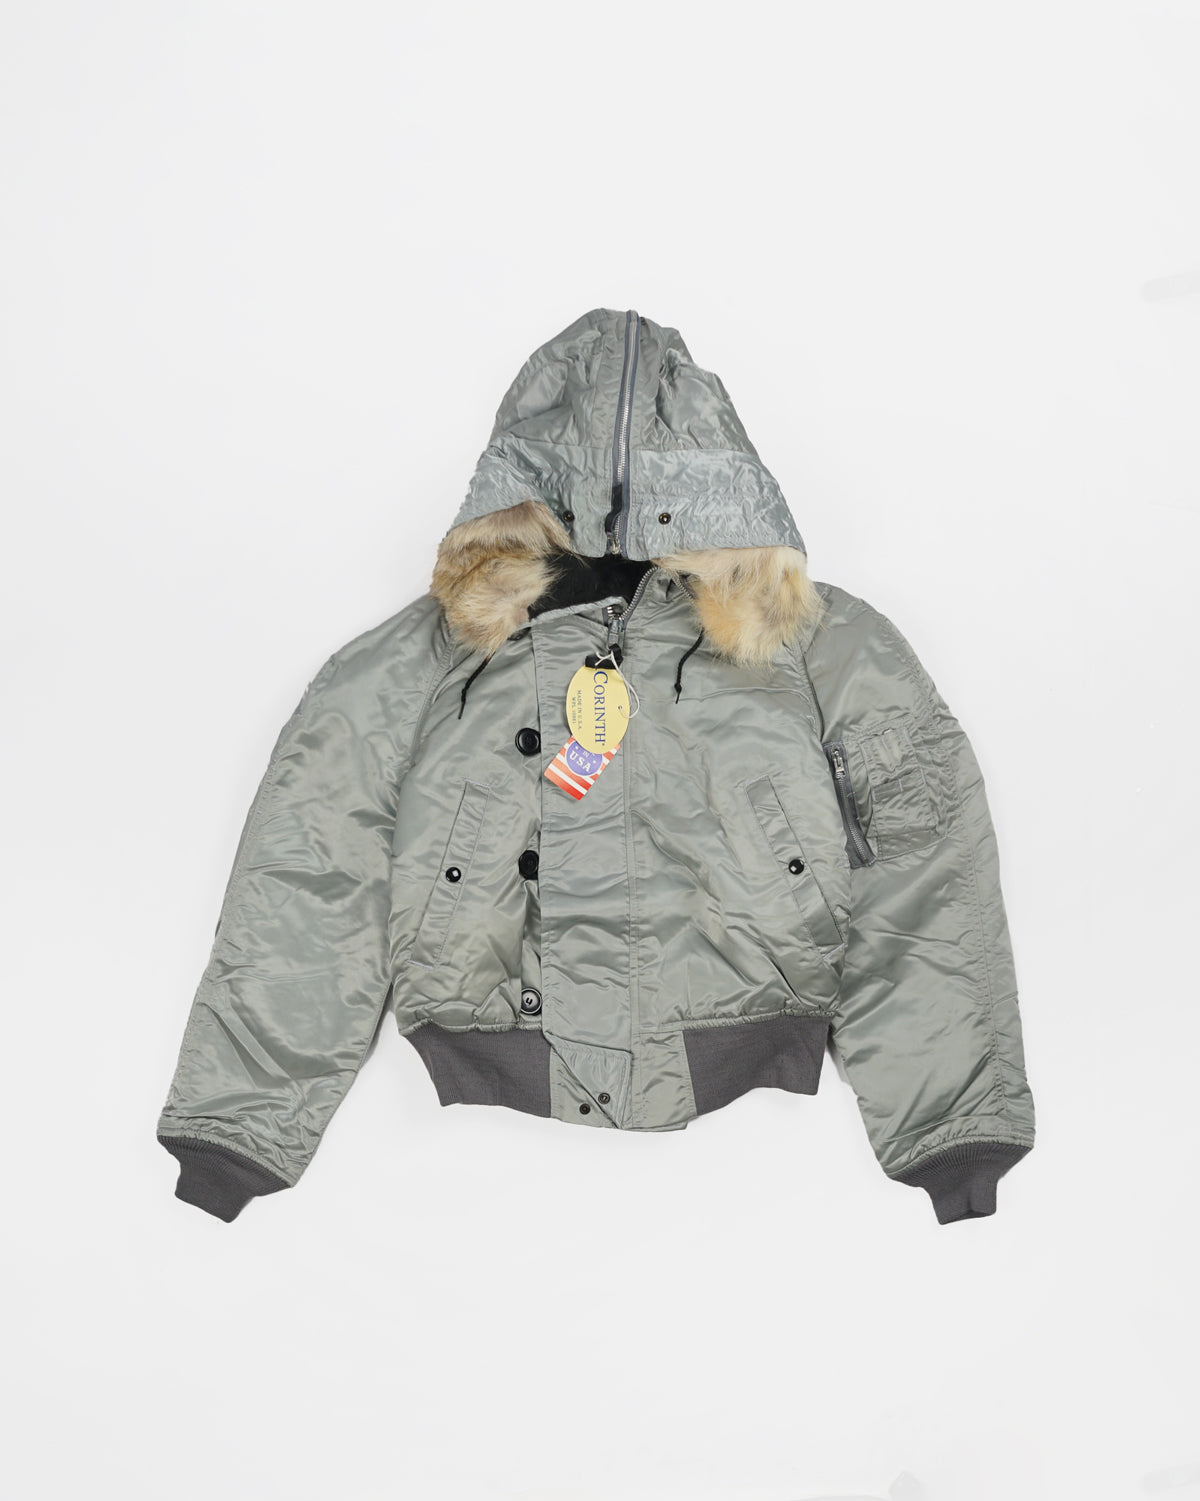 N-2B Cold Wether Jacket w/ Coyote Fur